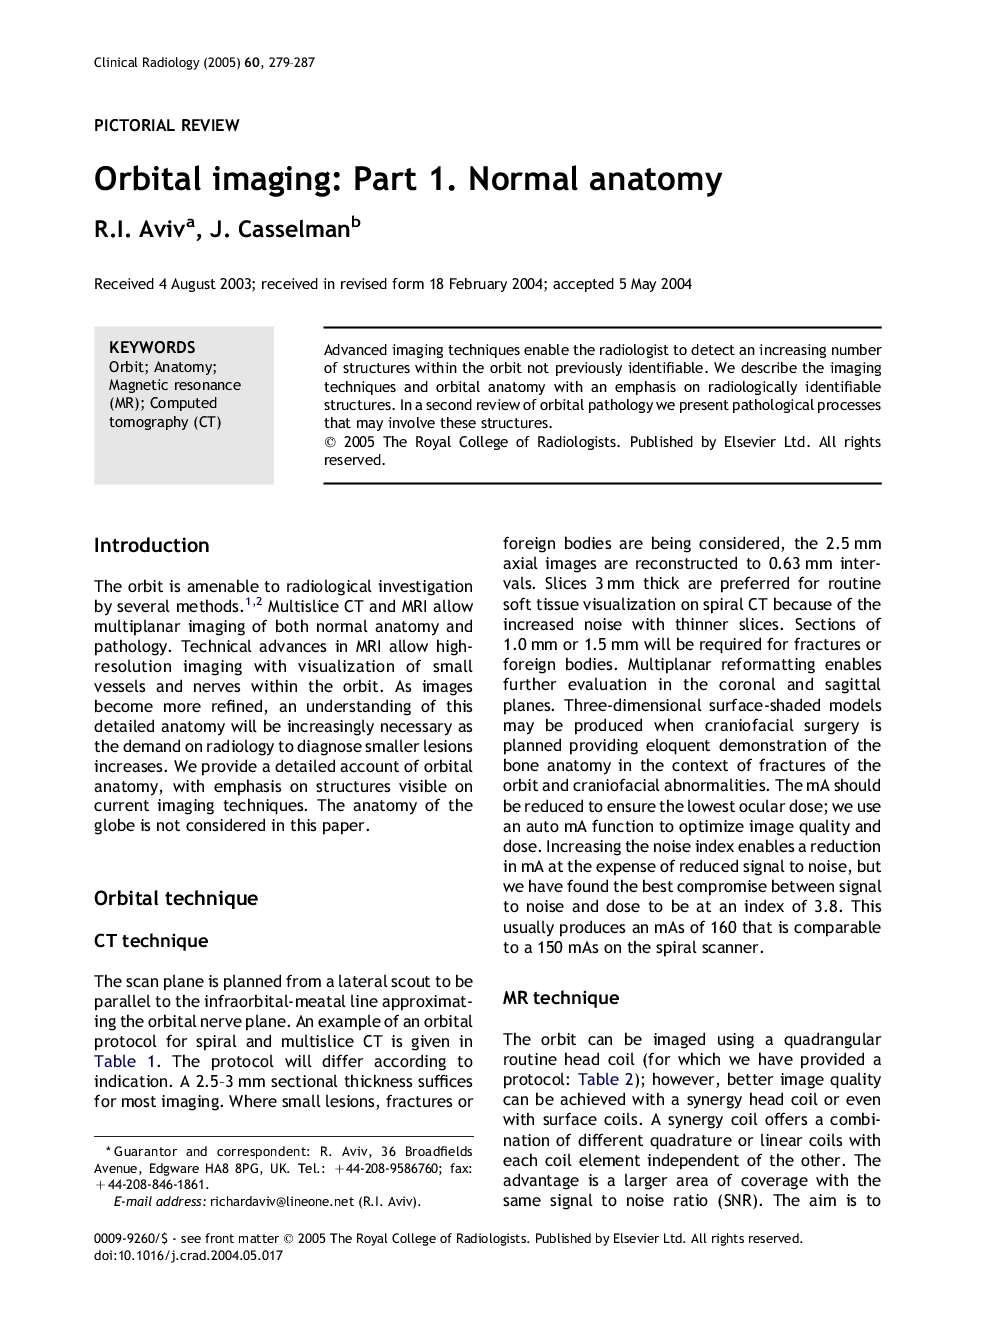 Orbital imaging: Part 1. Normal anatomy